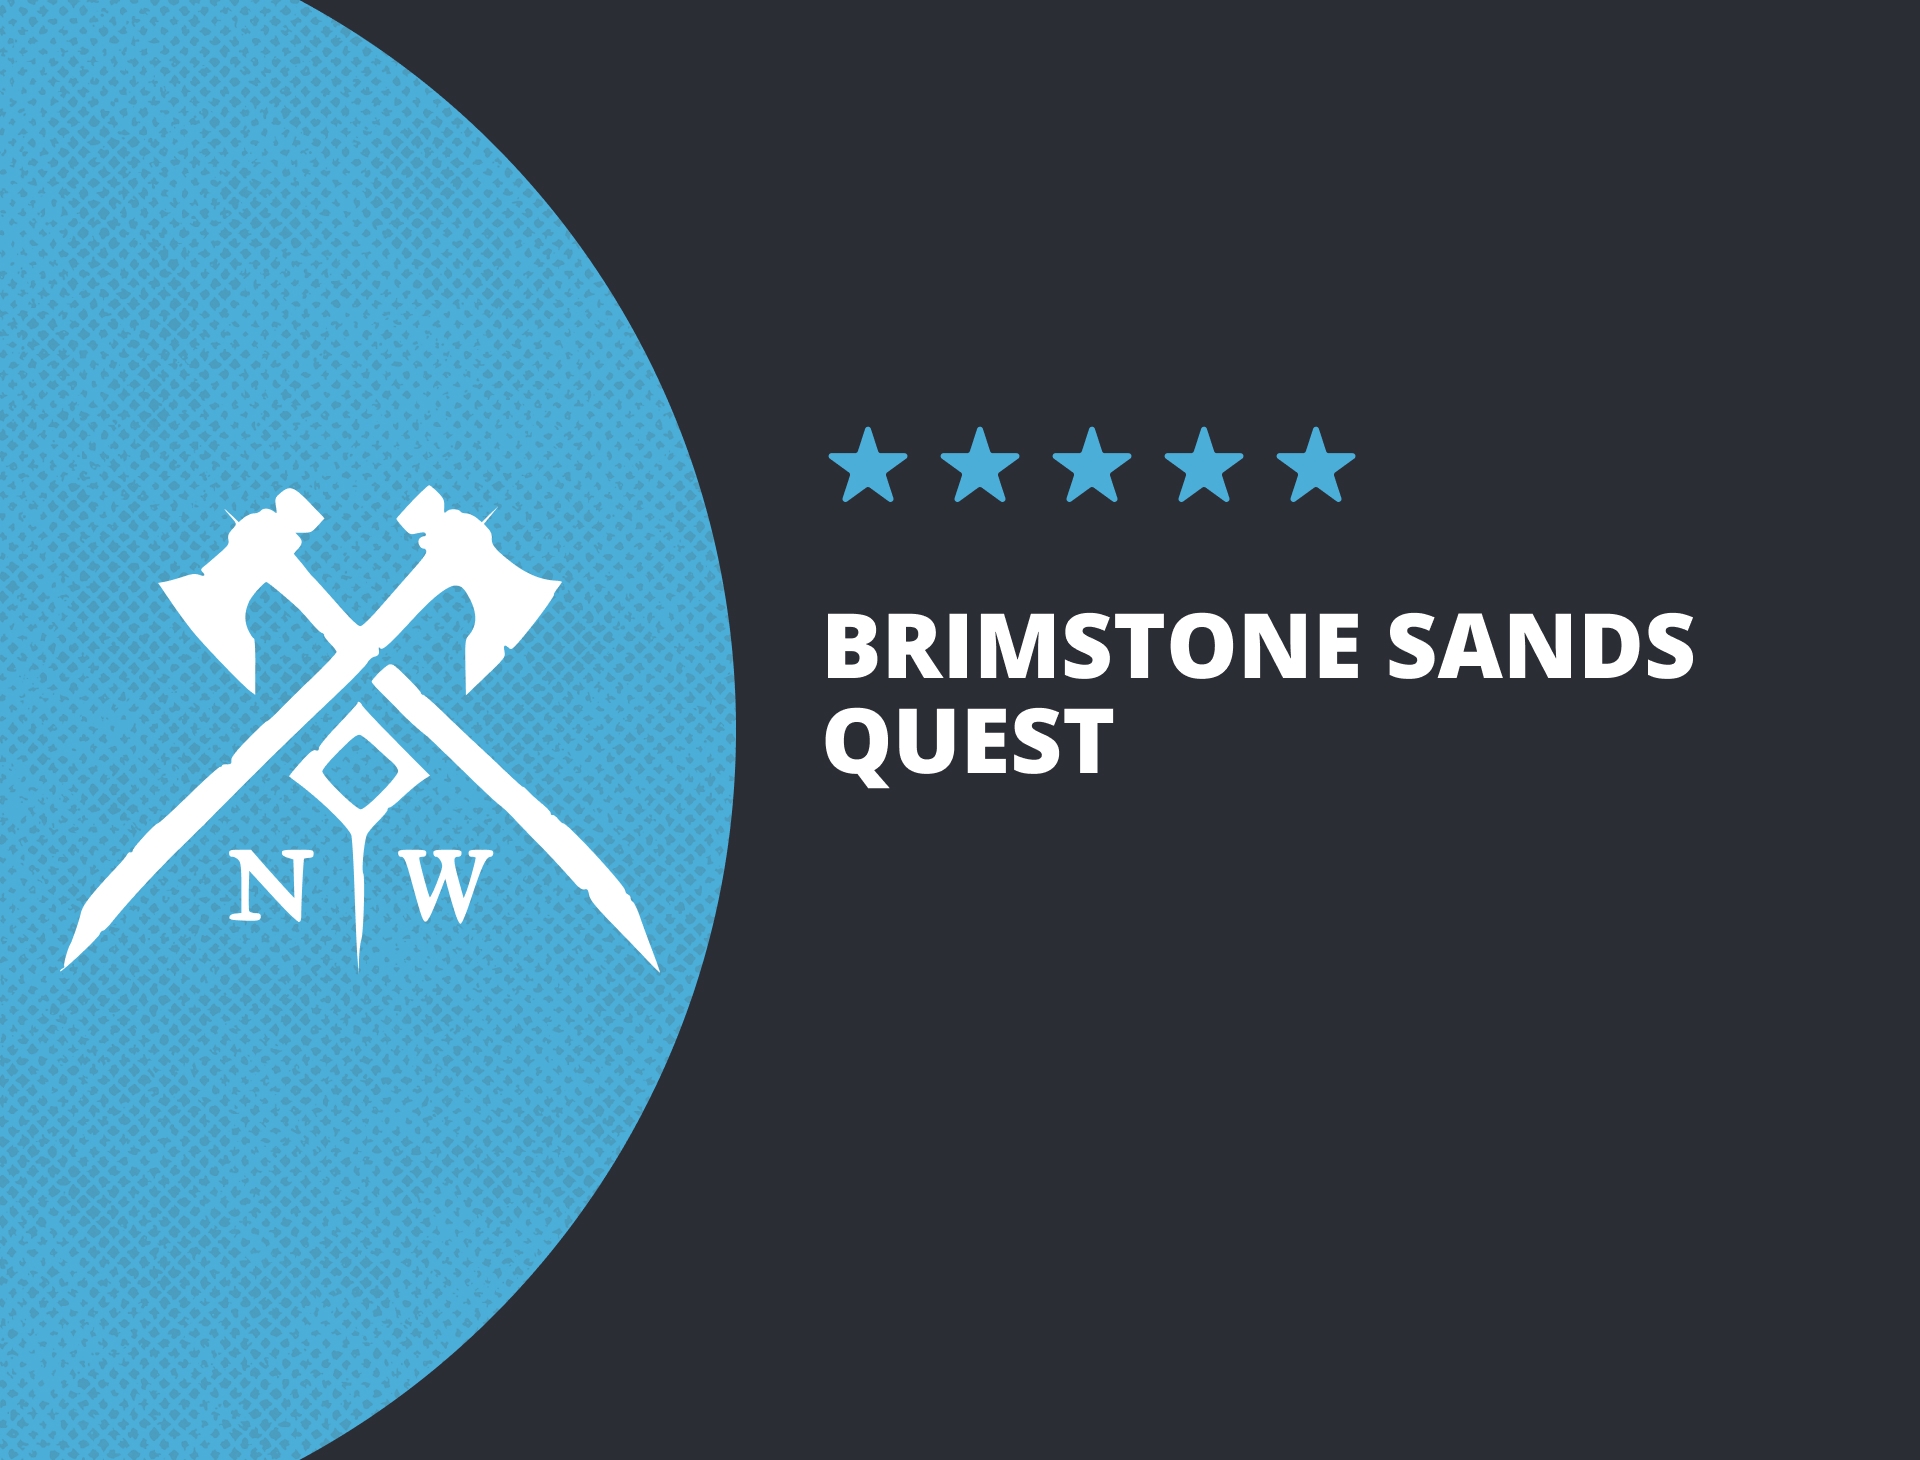 Brimstone Sands Quest